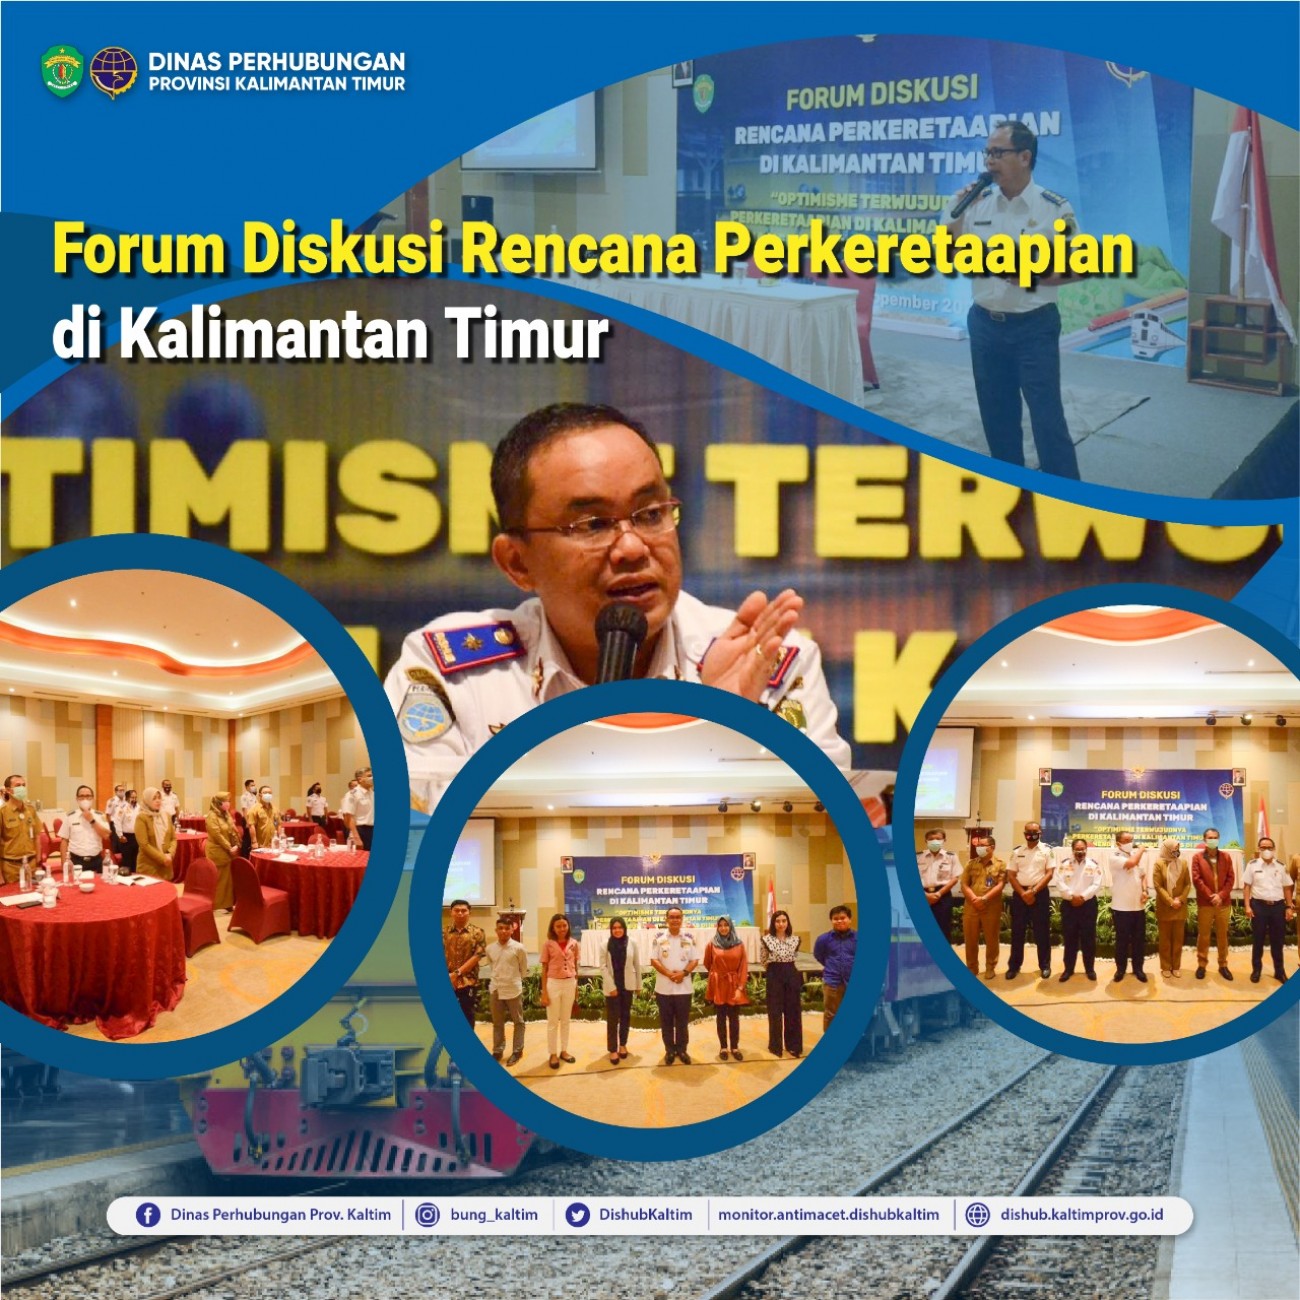 Forum Diskusi Rencana Perkeretaapian di Kalimantan Timur